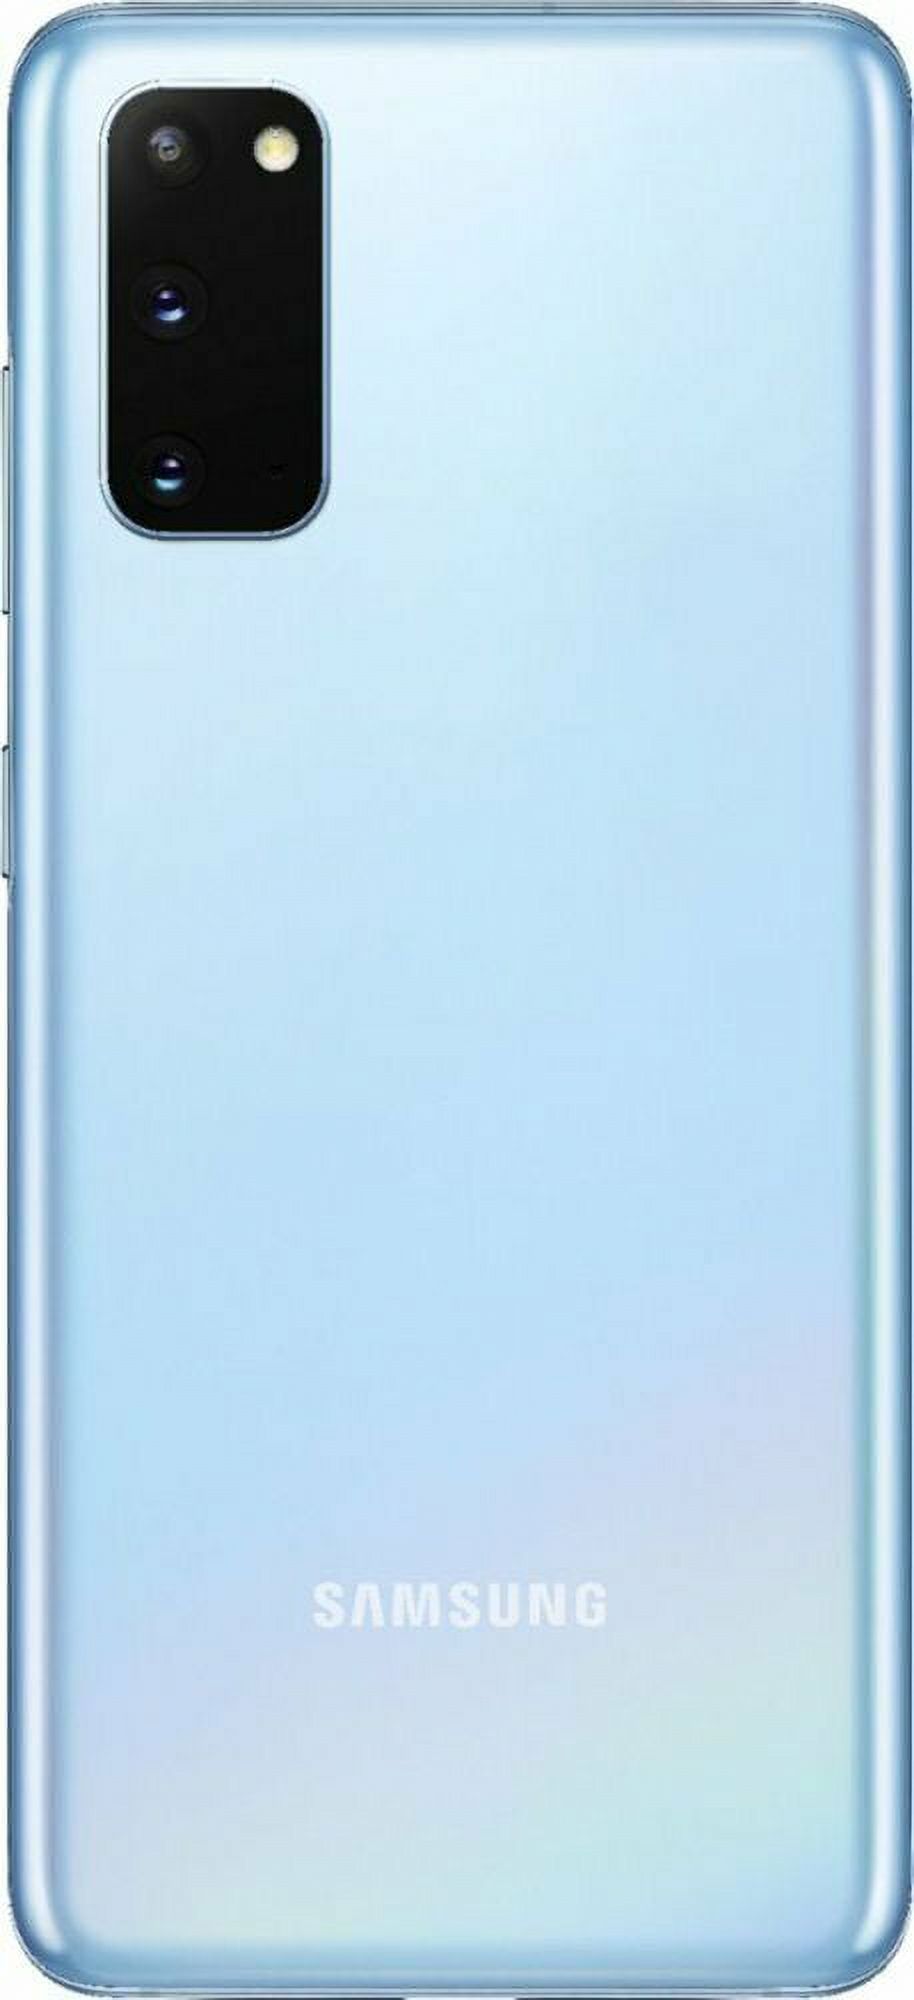 Restored Samsung Galaxy S20 5G 128GB Factory Unlocked Smartphone (Refurbished) - image 3 of 3